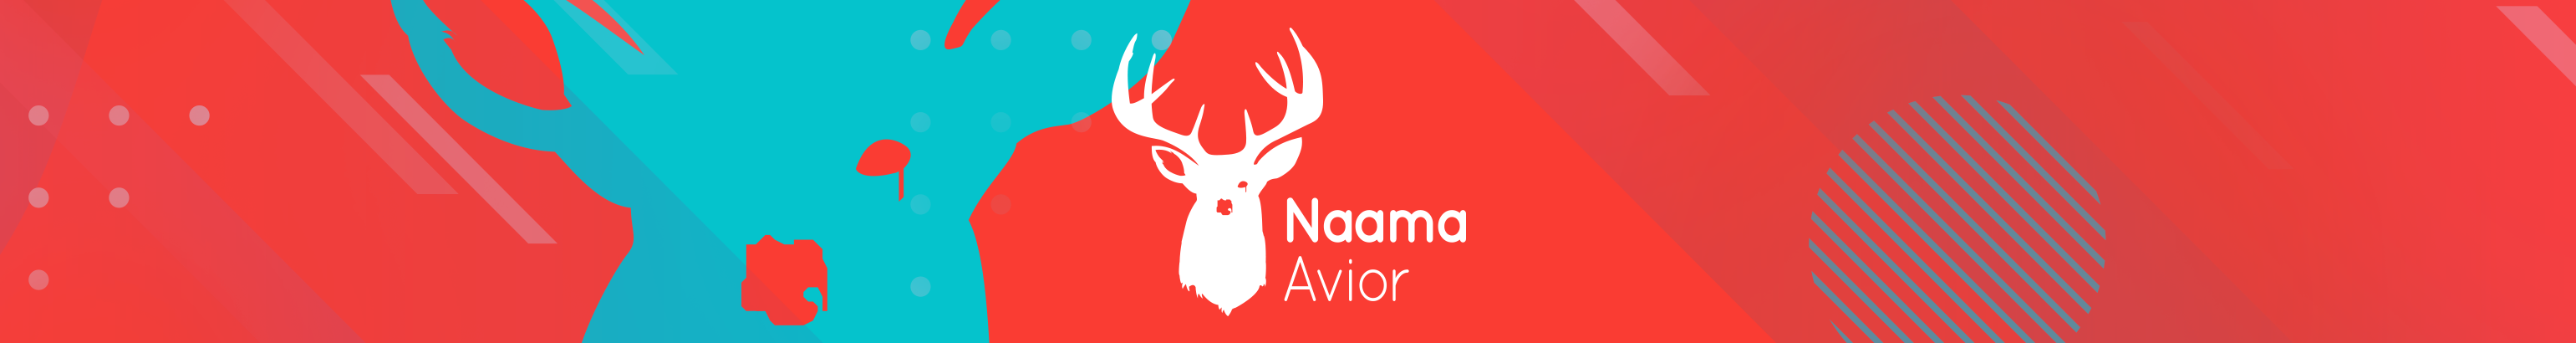 Naama Avior's profile banner